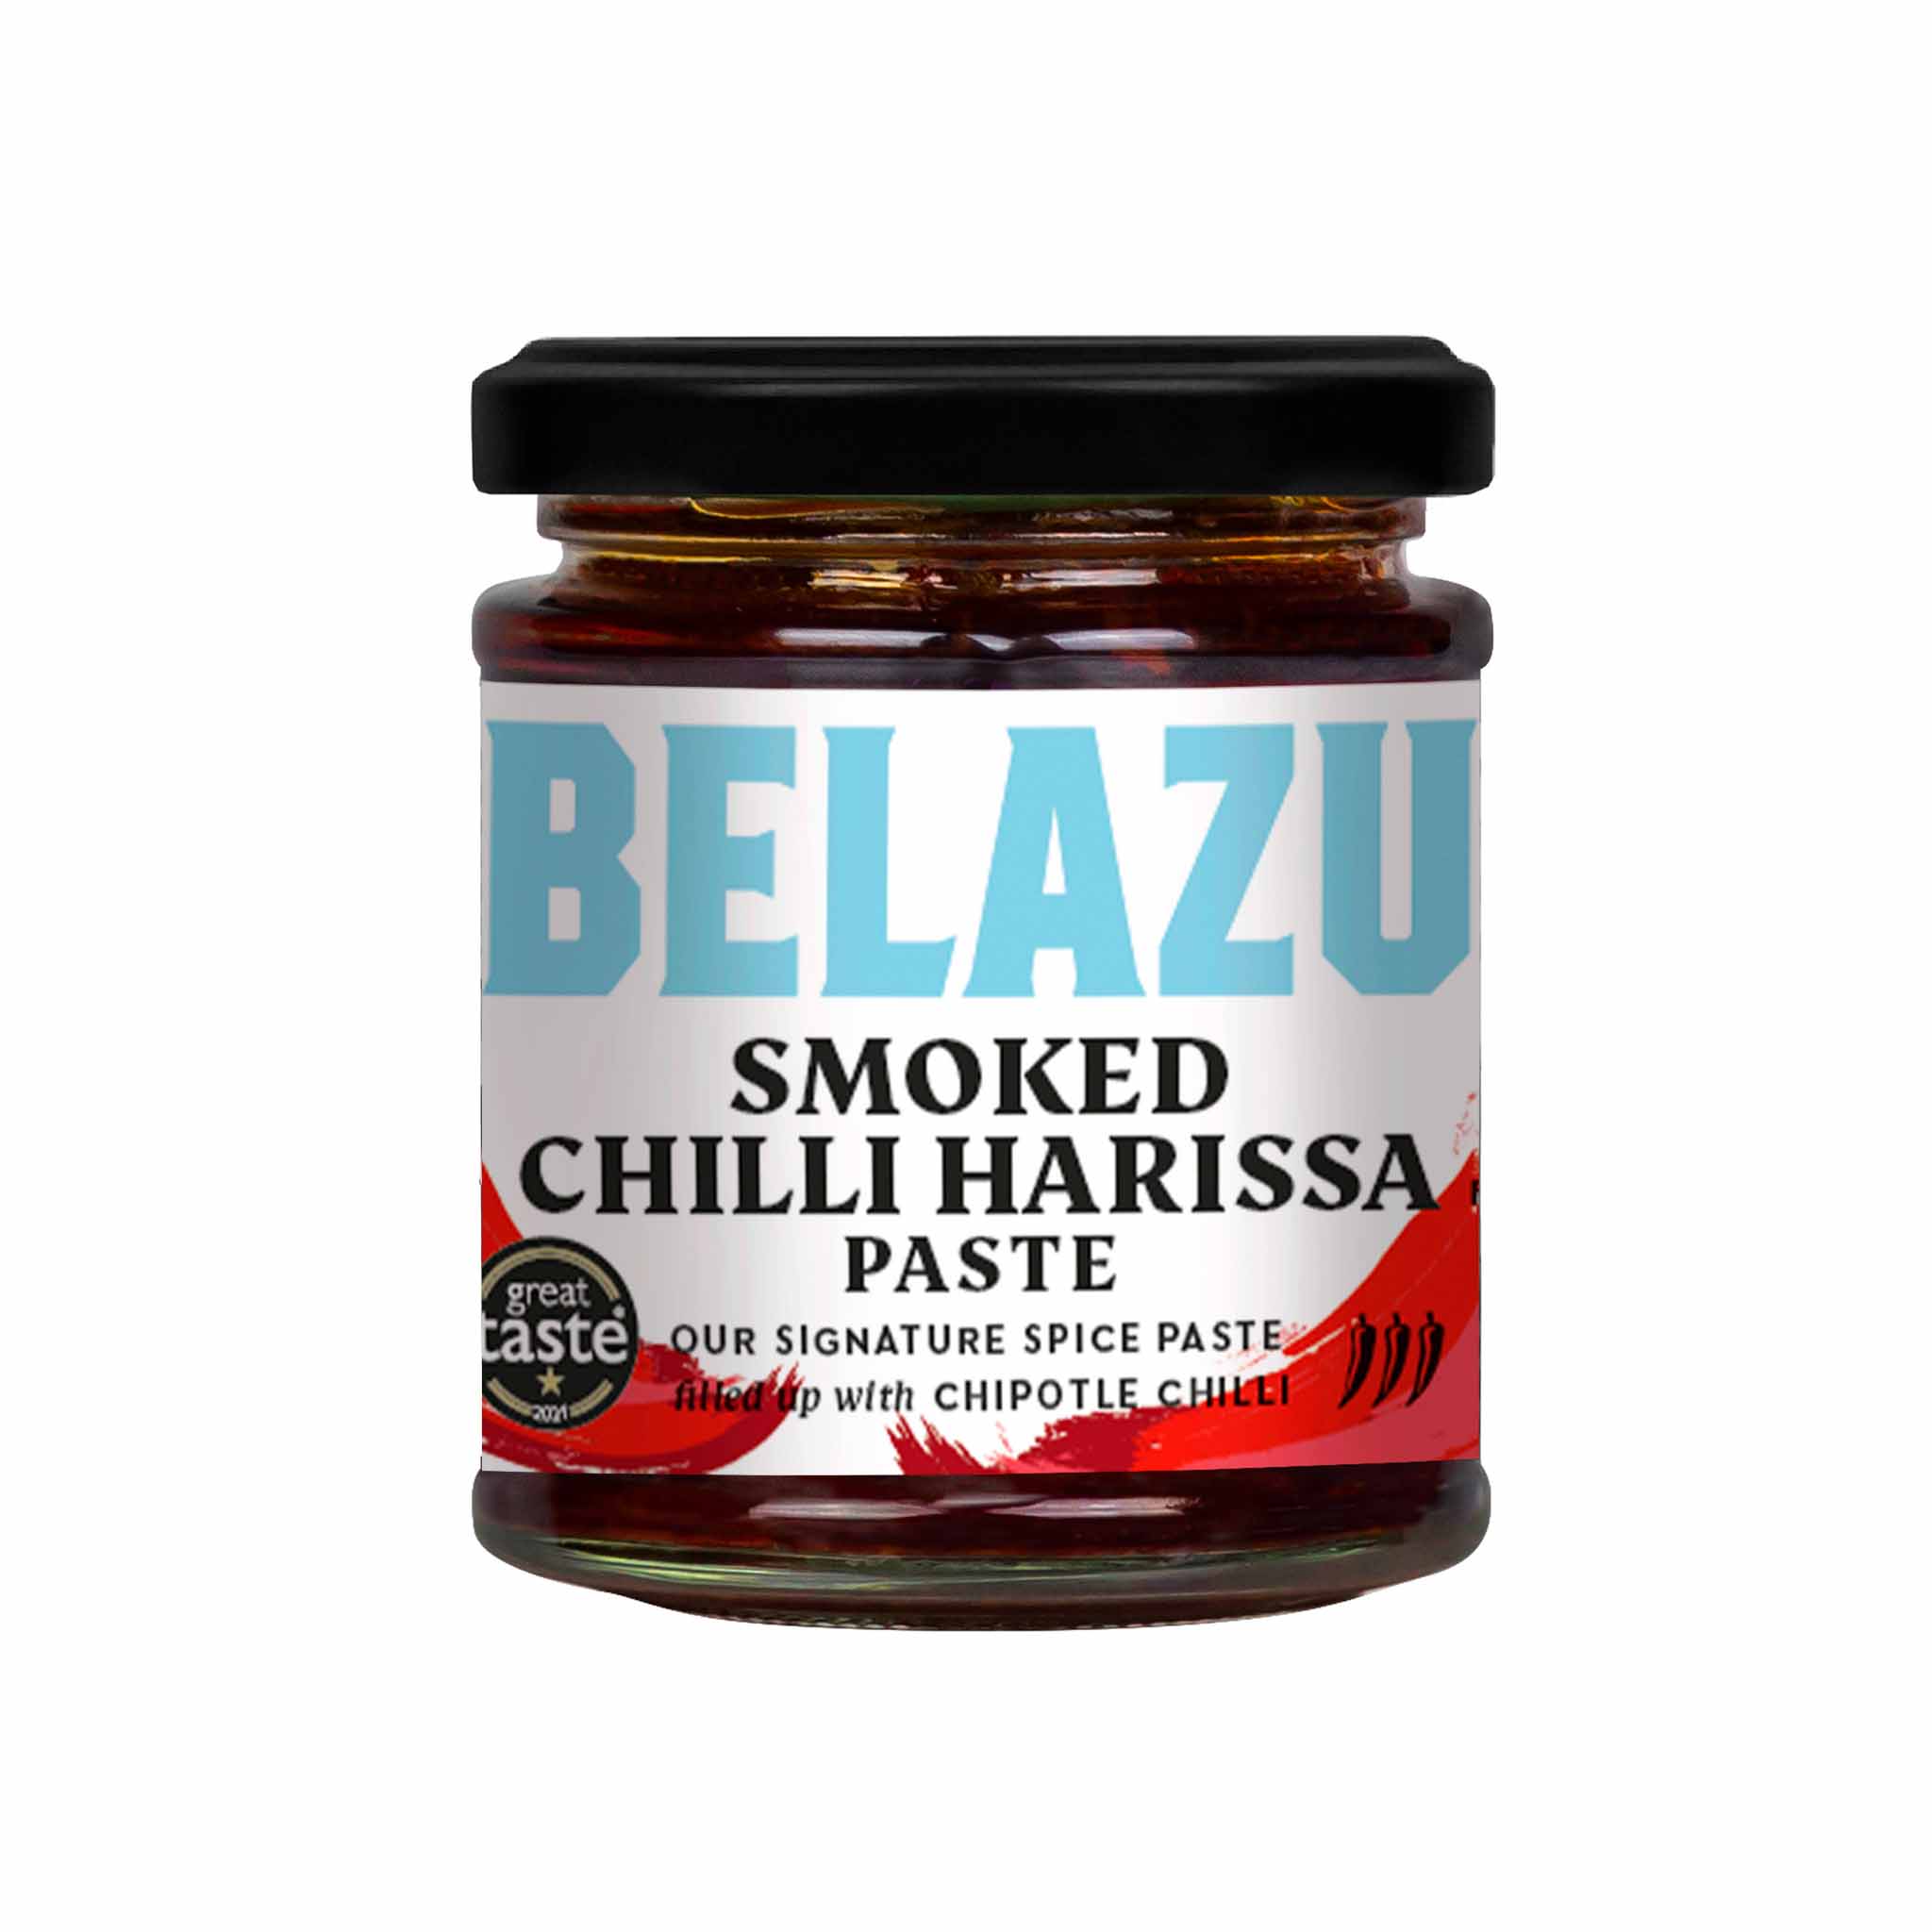 Belazu Smoked Chipotle Chili Harissa Paste in a Glass Jar